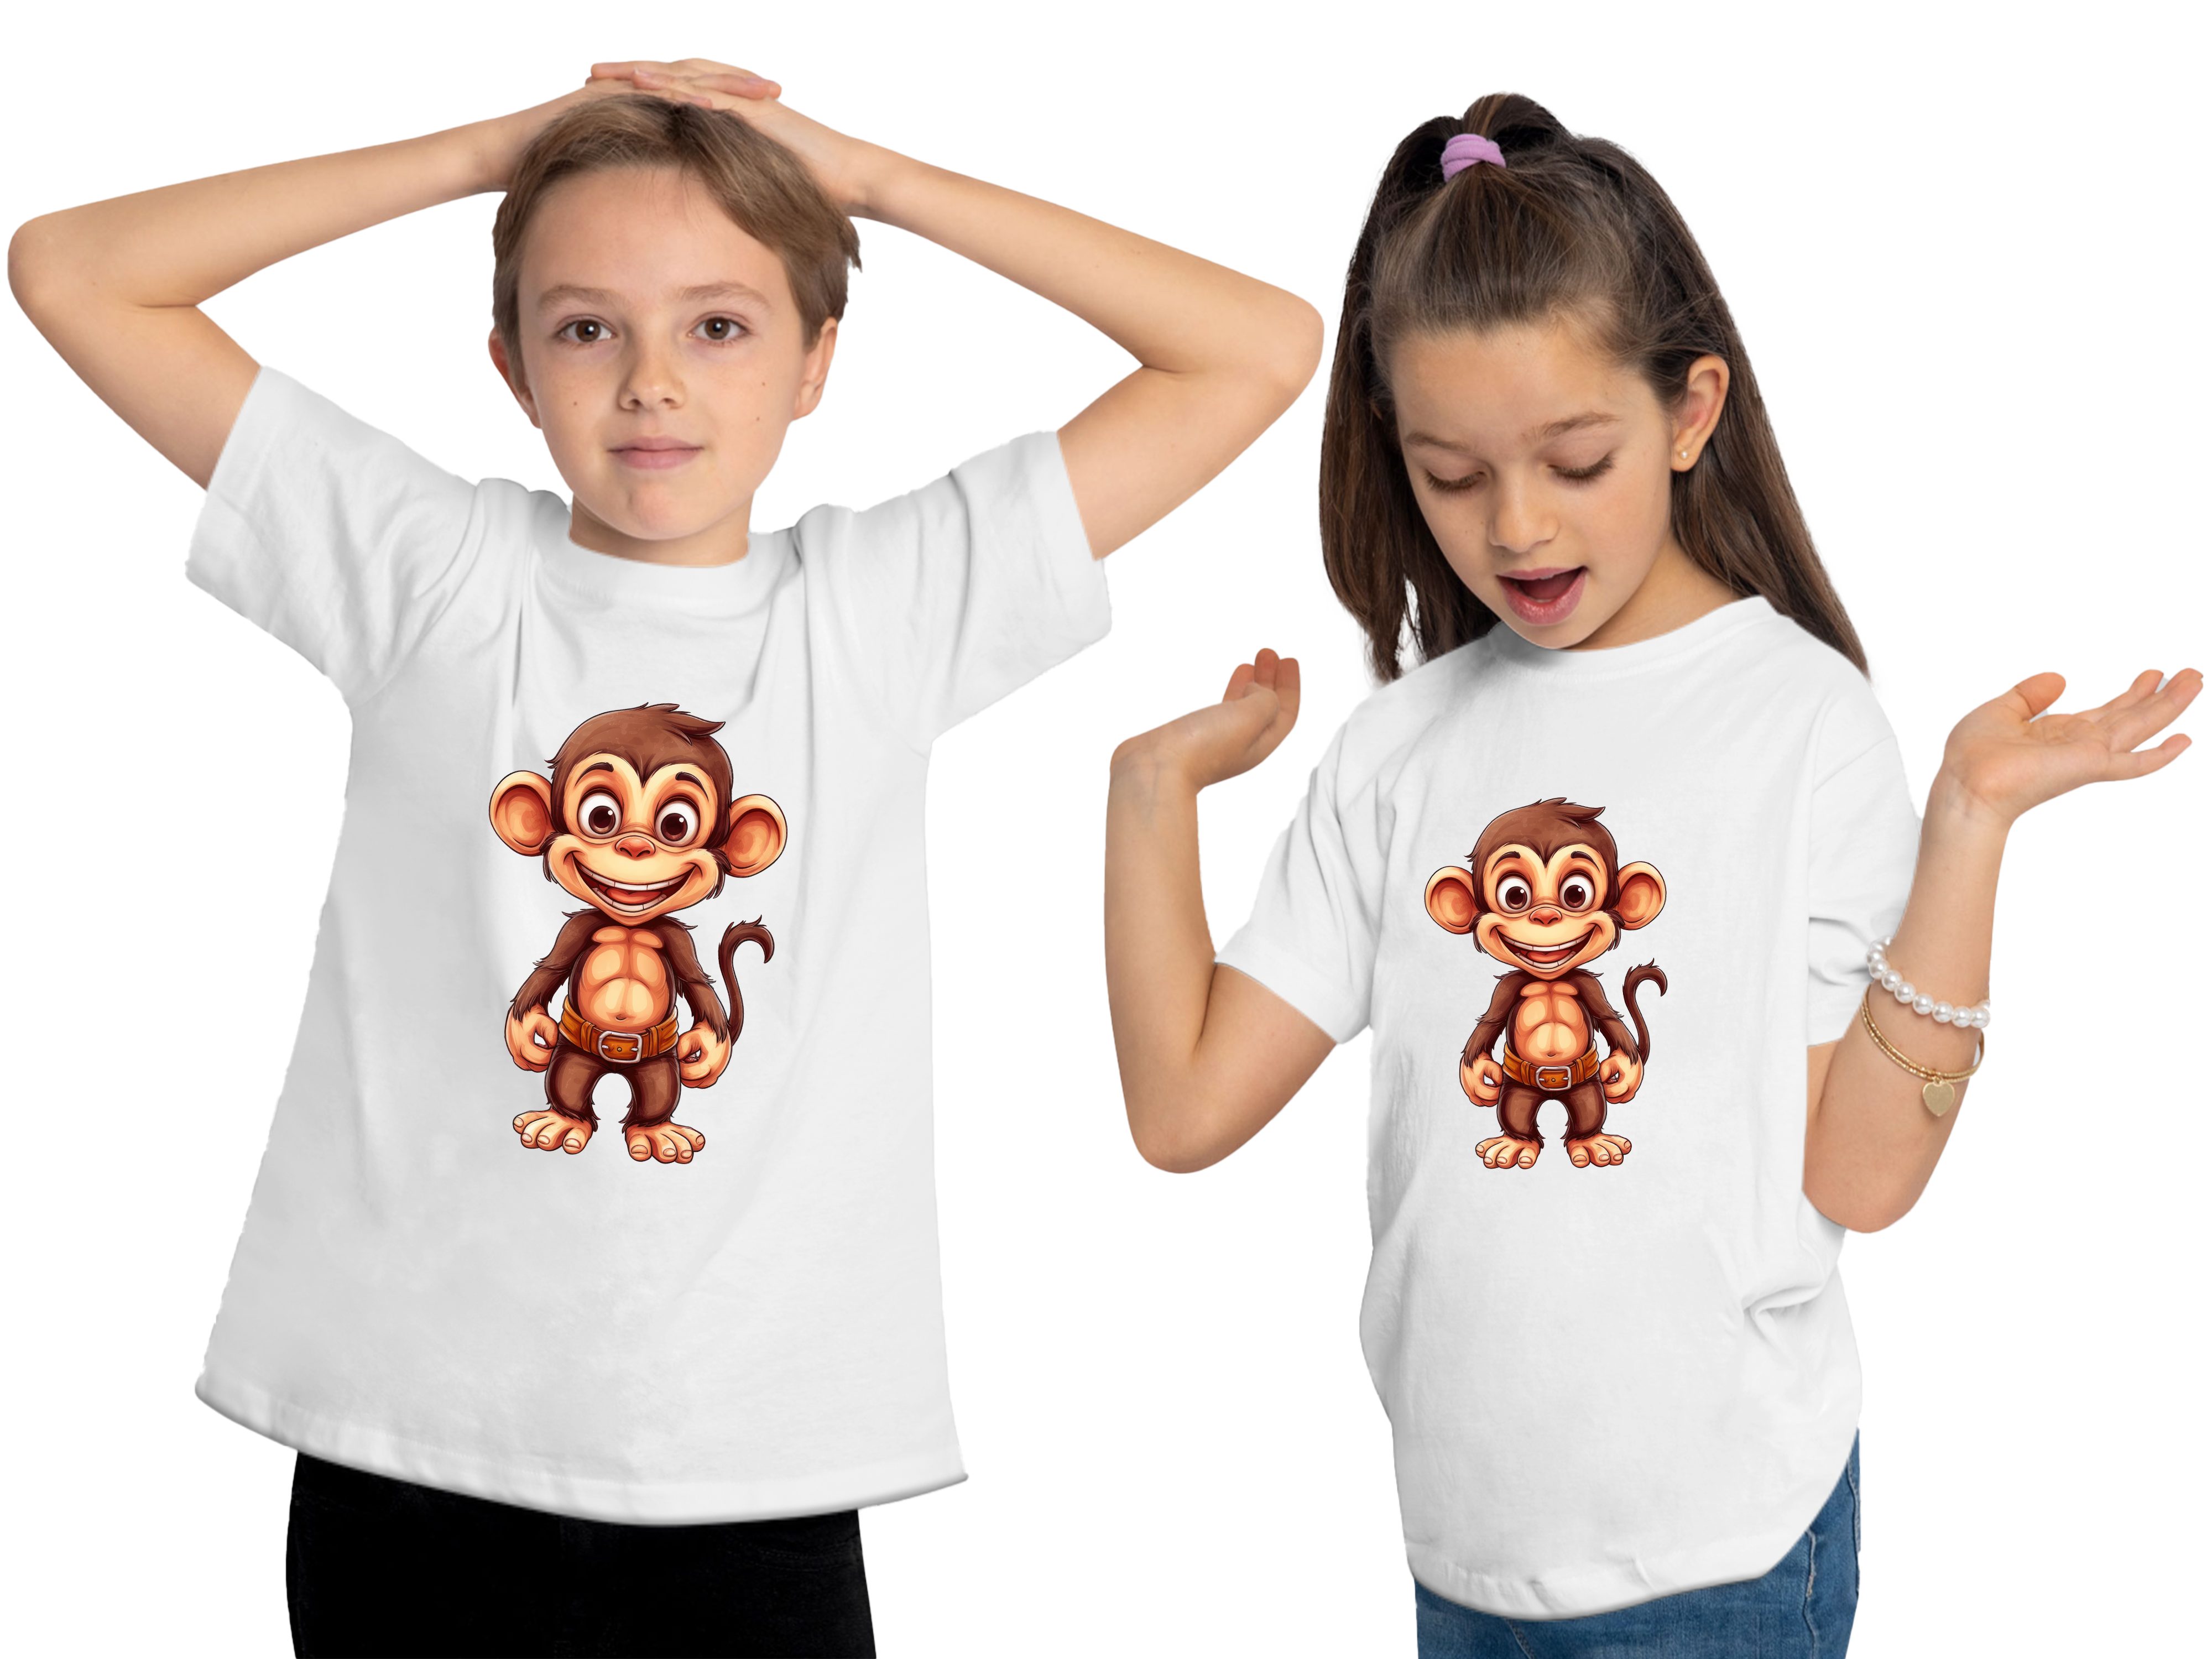 MyDesign24 T-Shirt Kinder weiss i276 Aufdruck, Baby mit Wildtier Schimpanse Affe - bedruckt Print Baumwollshirt Shirt